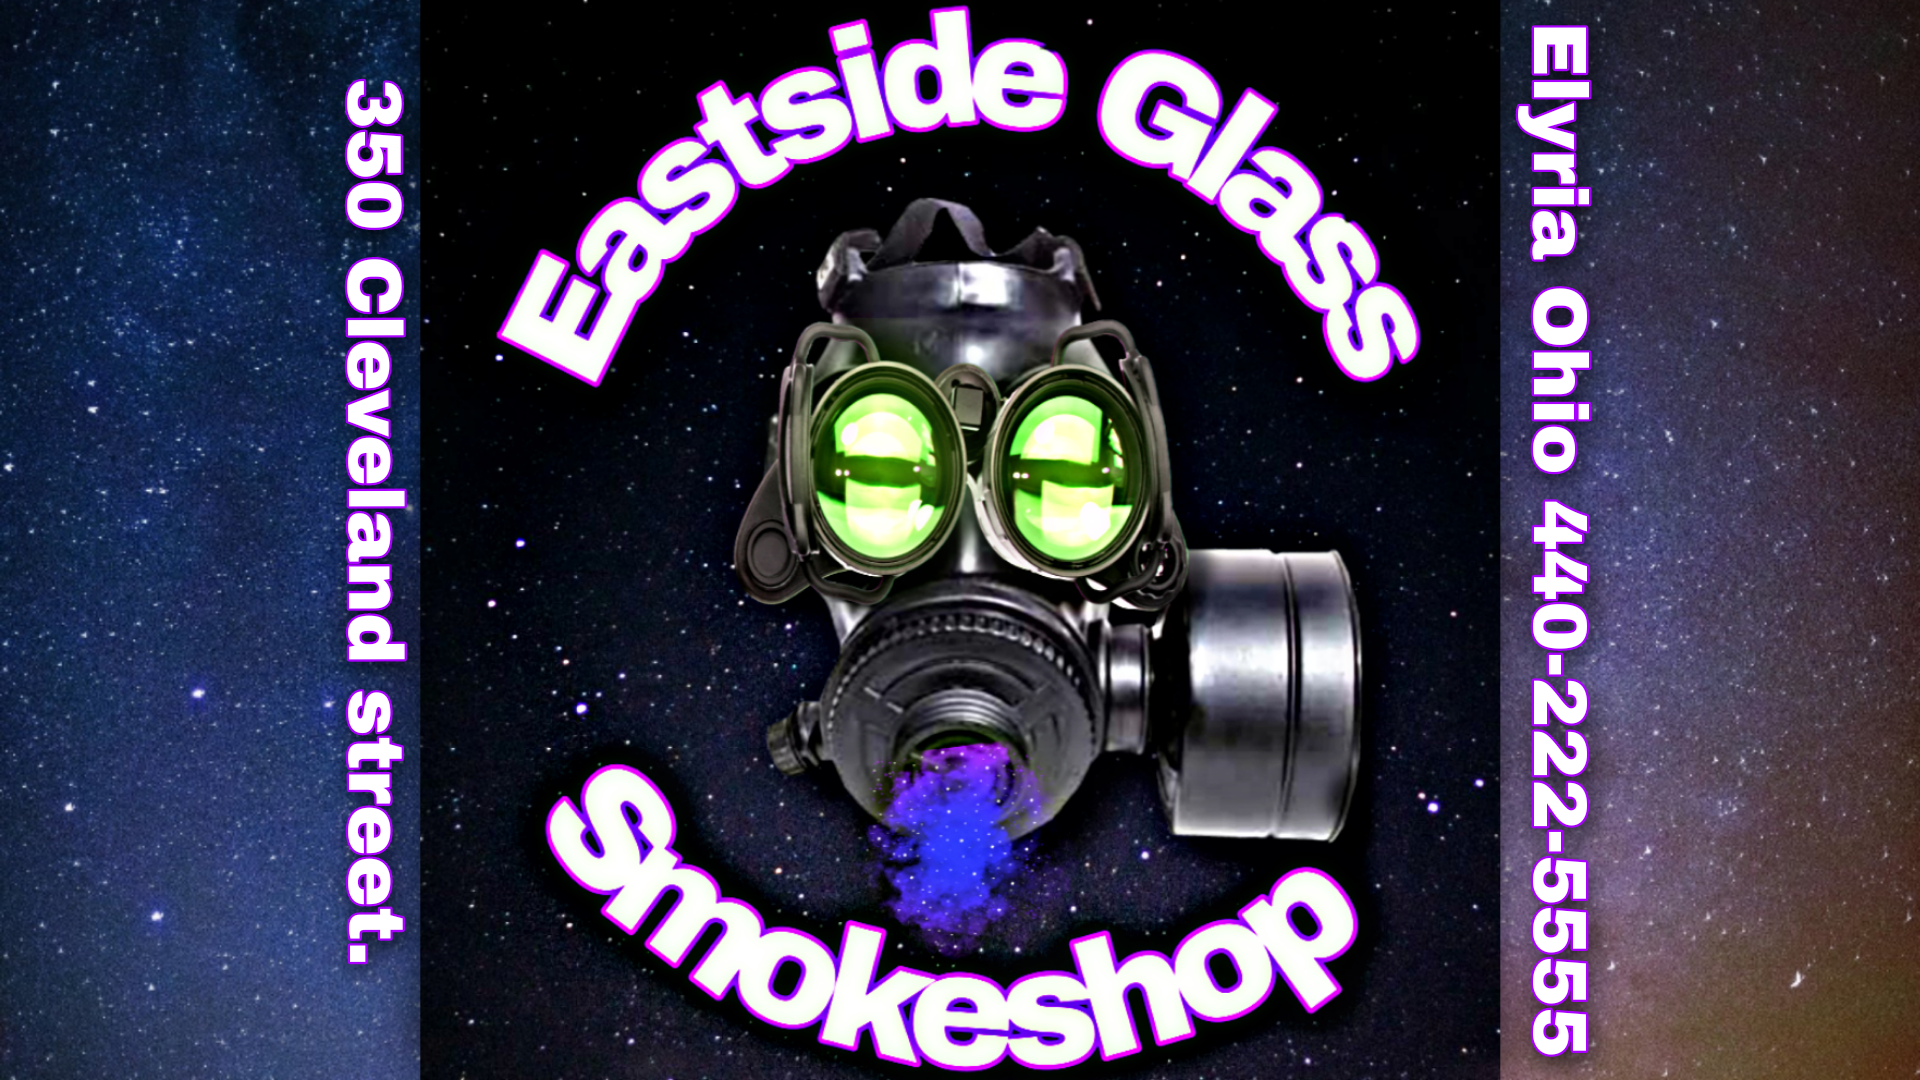 Eastside Glass